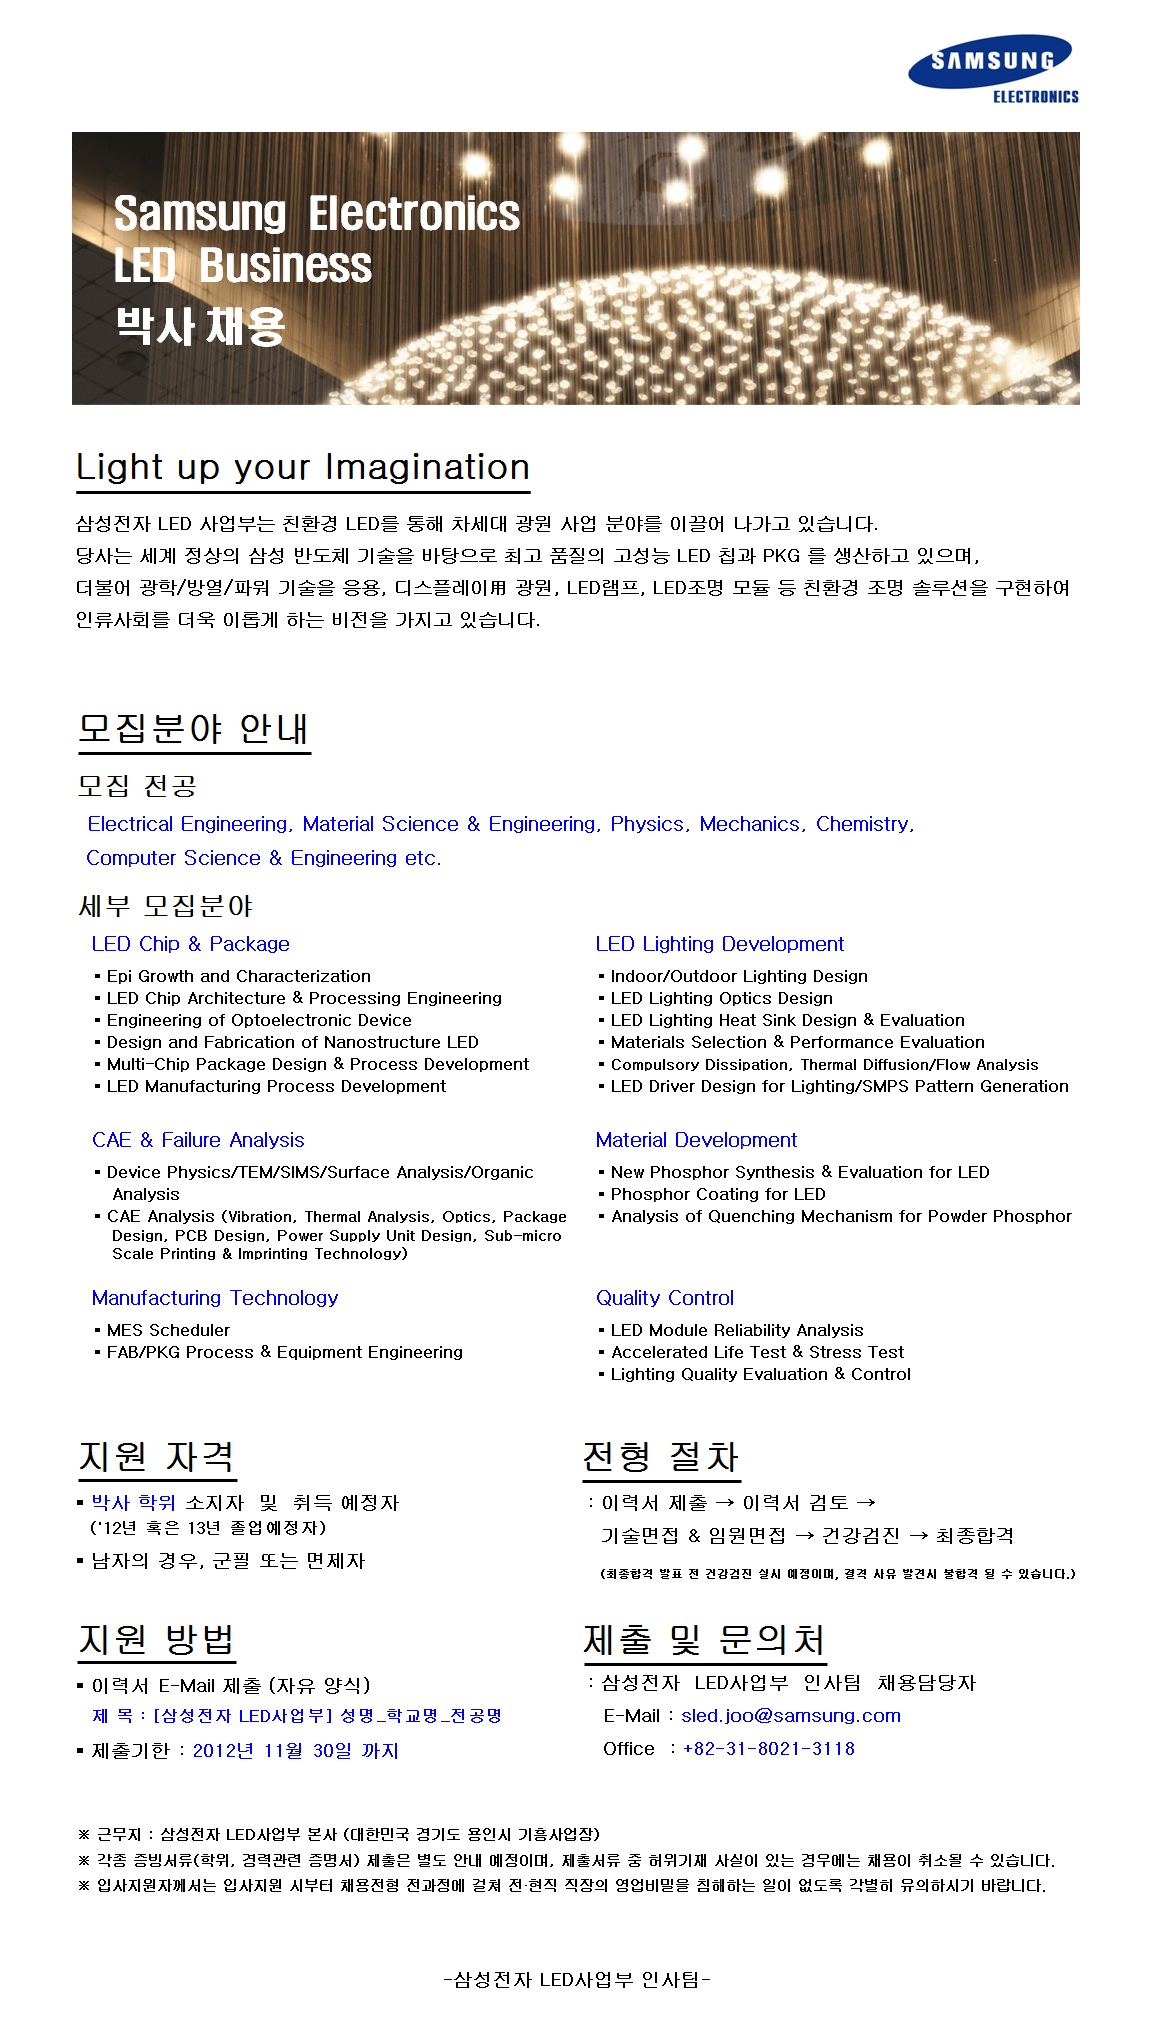 (Samsung Electronics LED Business) Ph.D Job Posting(11.30).jpg